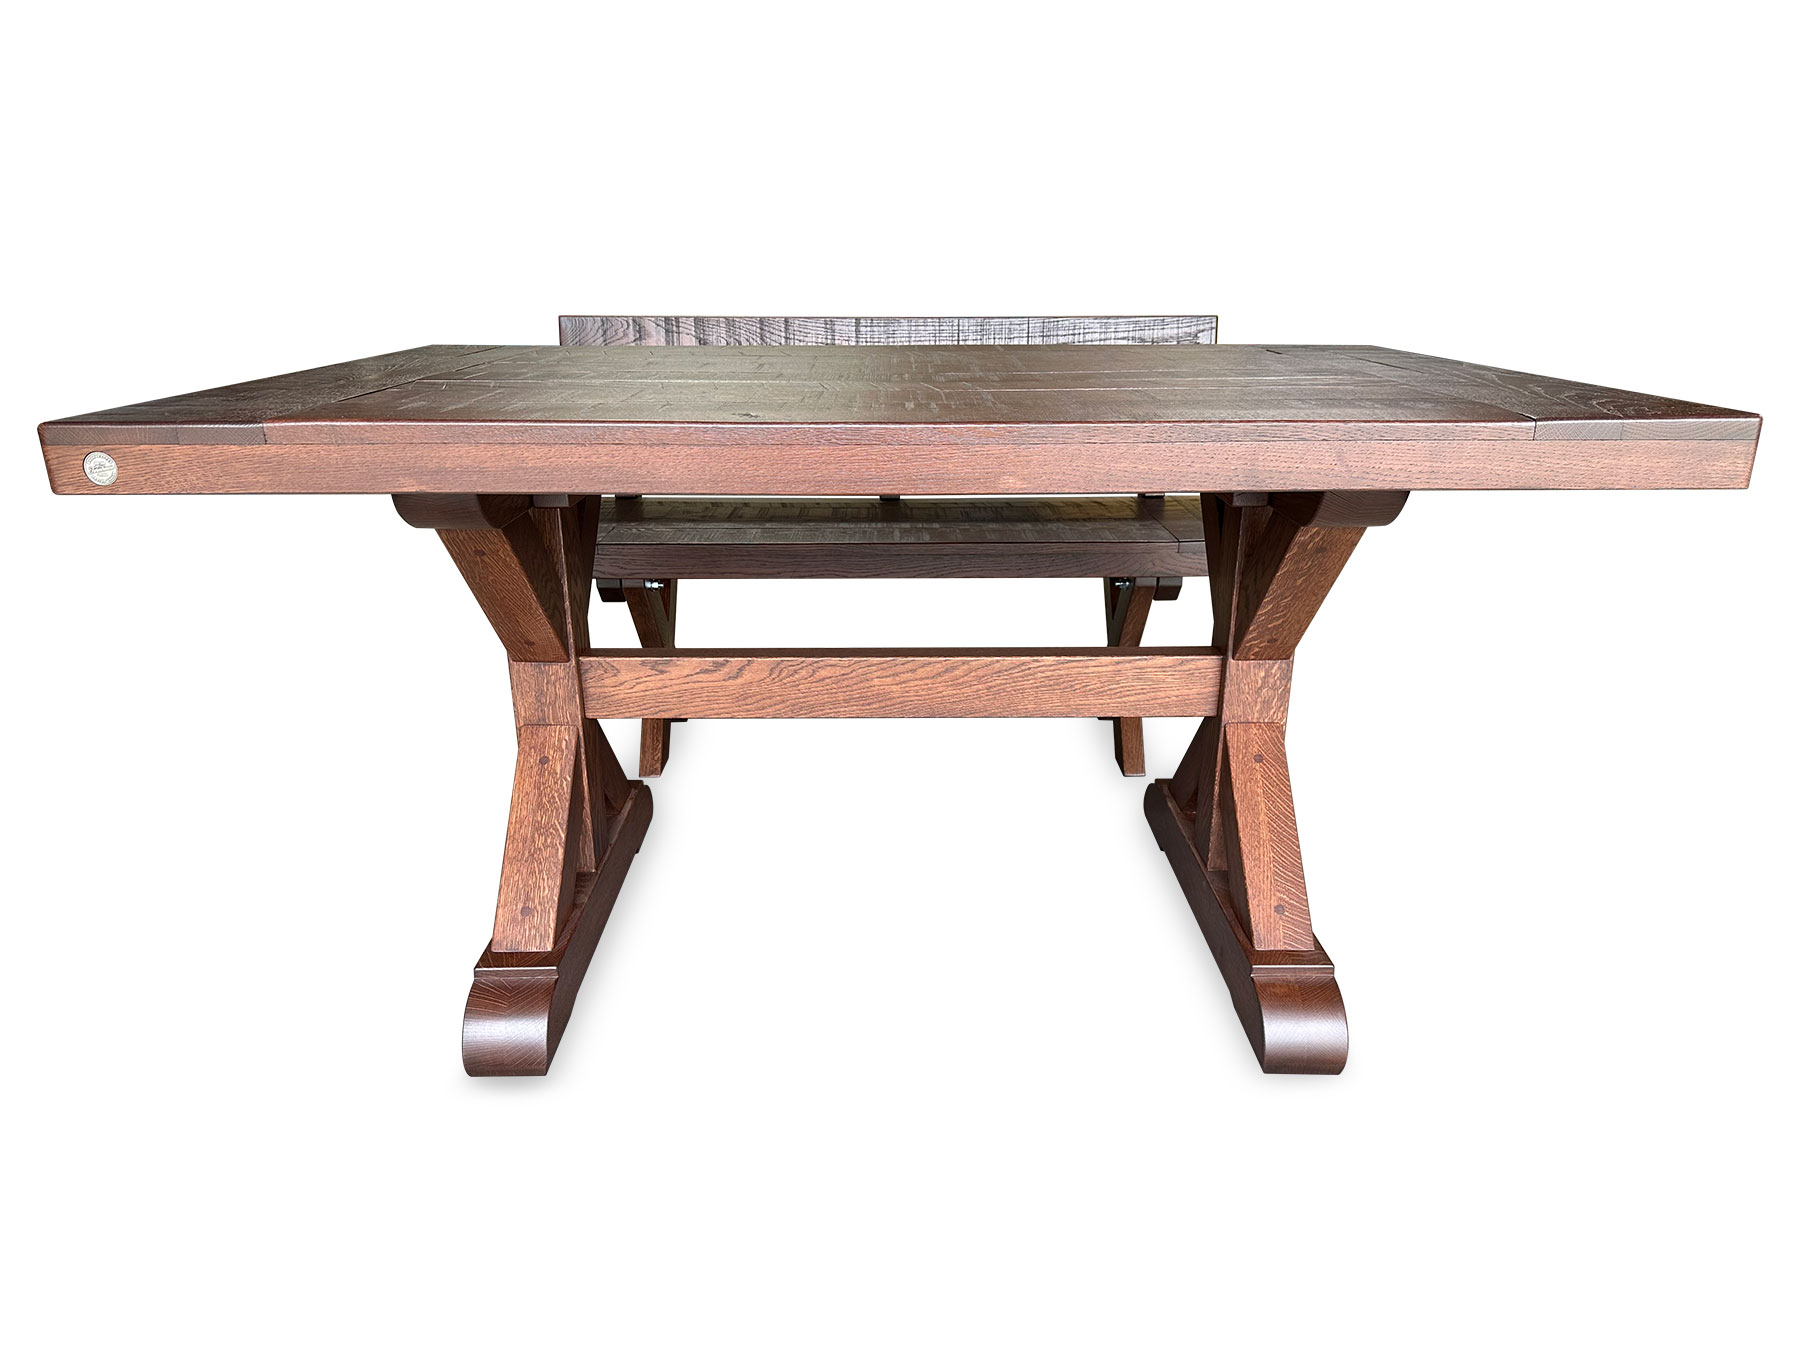 The Moscati Trestle farm table